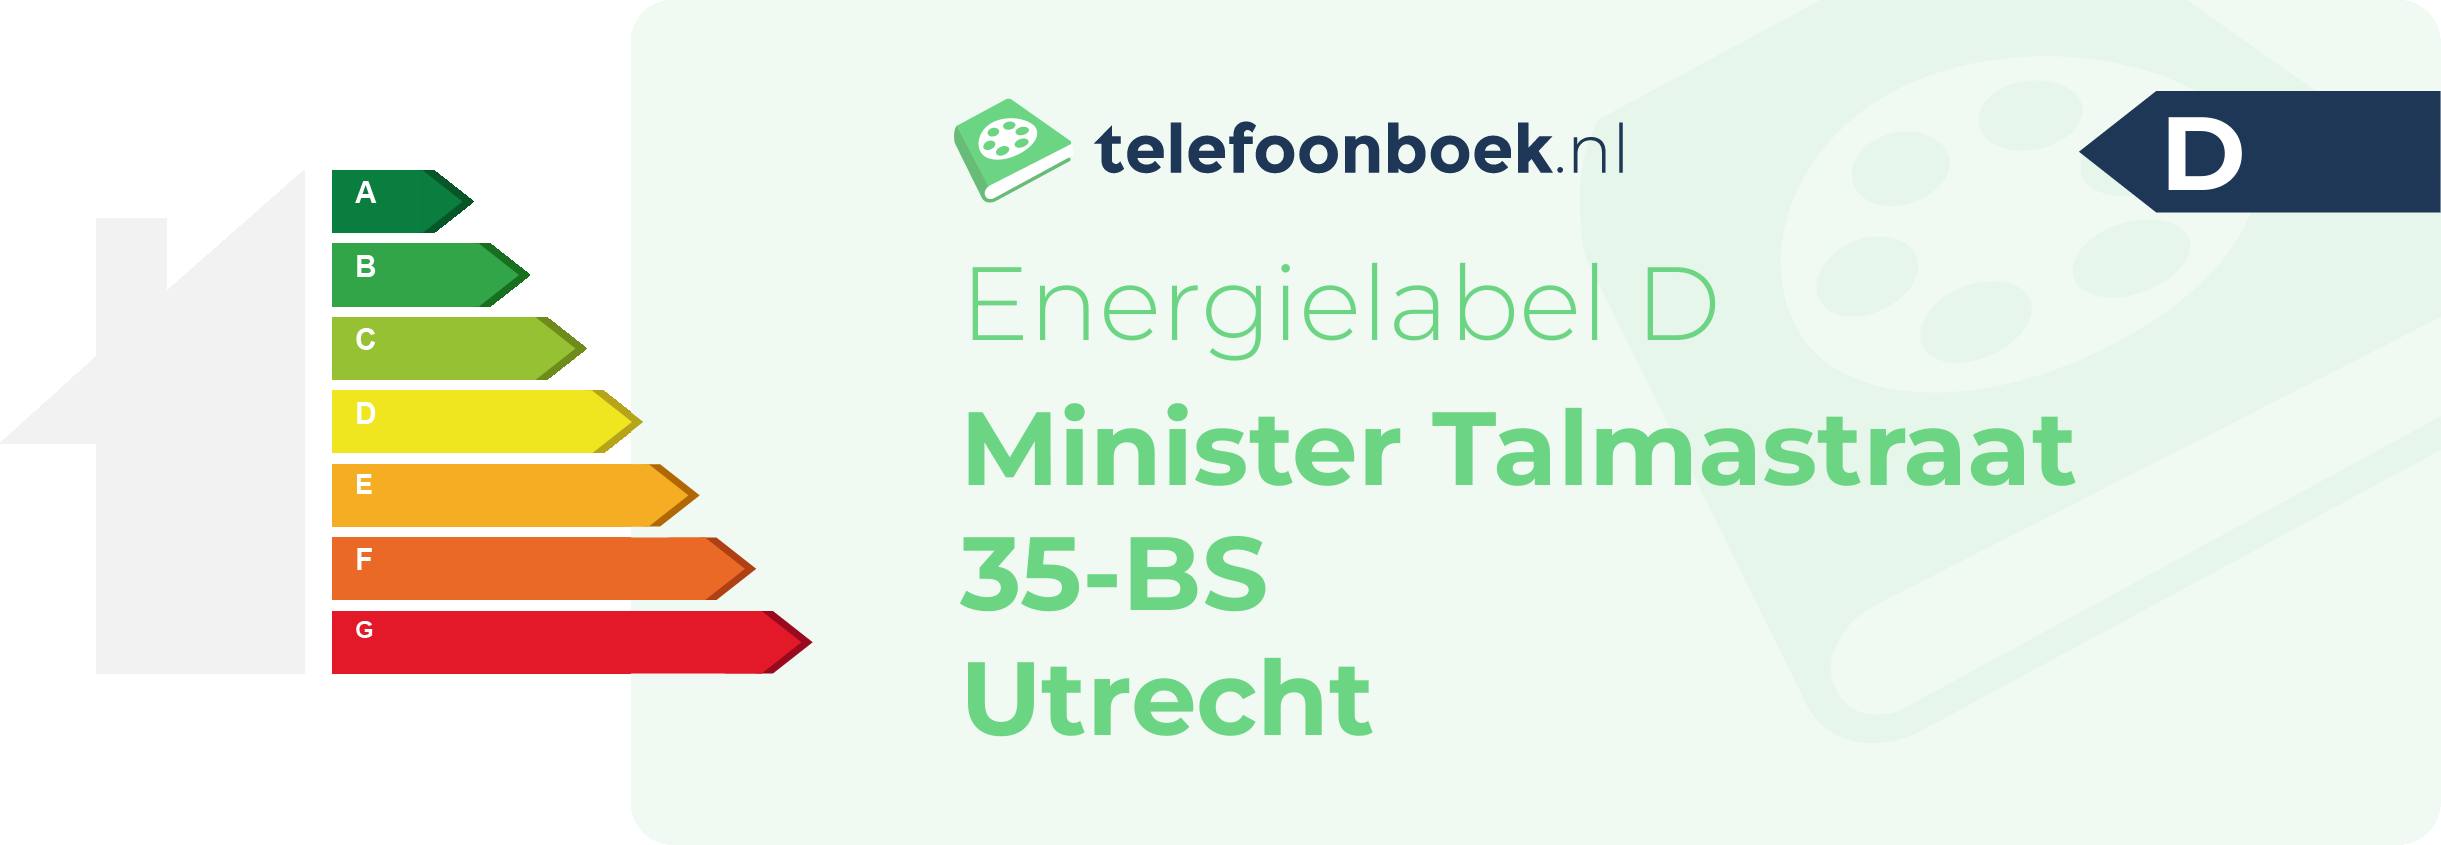 Energielabel Minister Talmastraat 35-BS Utrecht